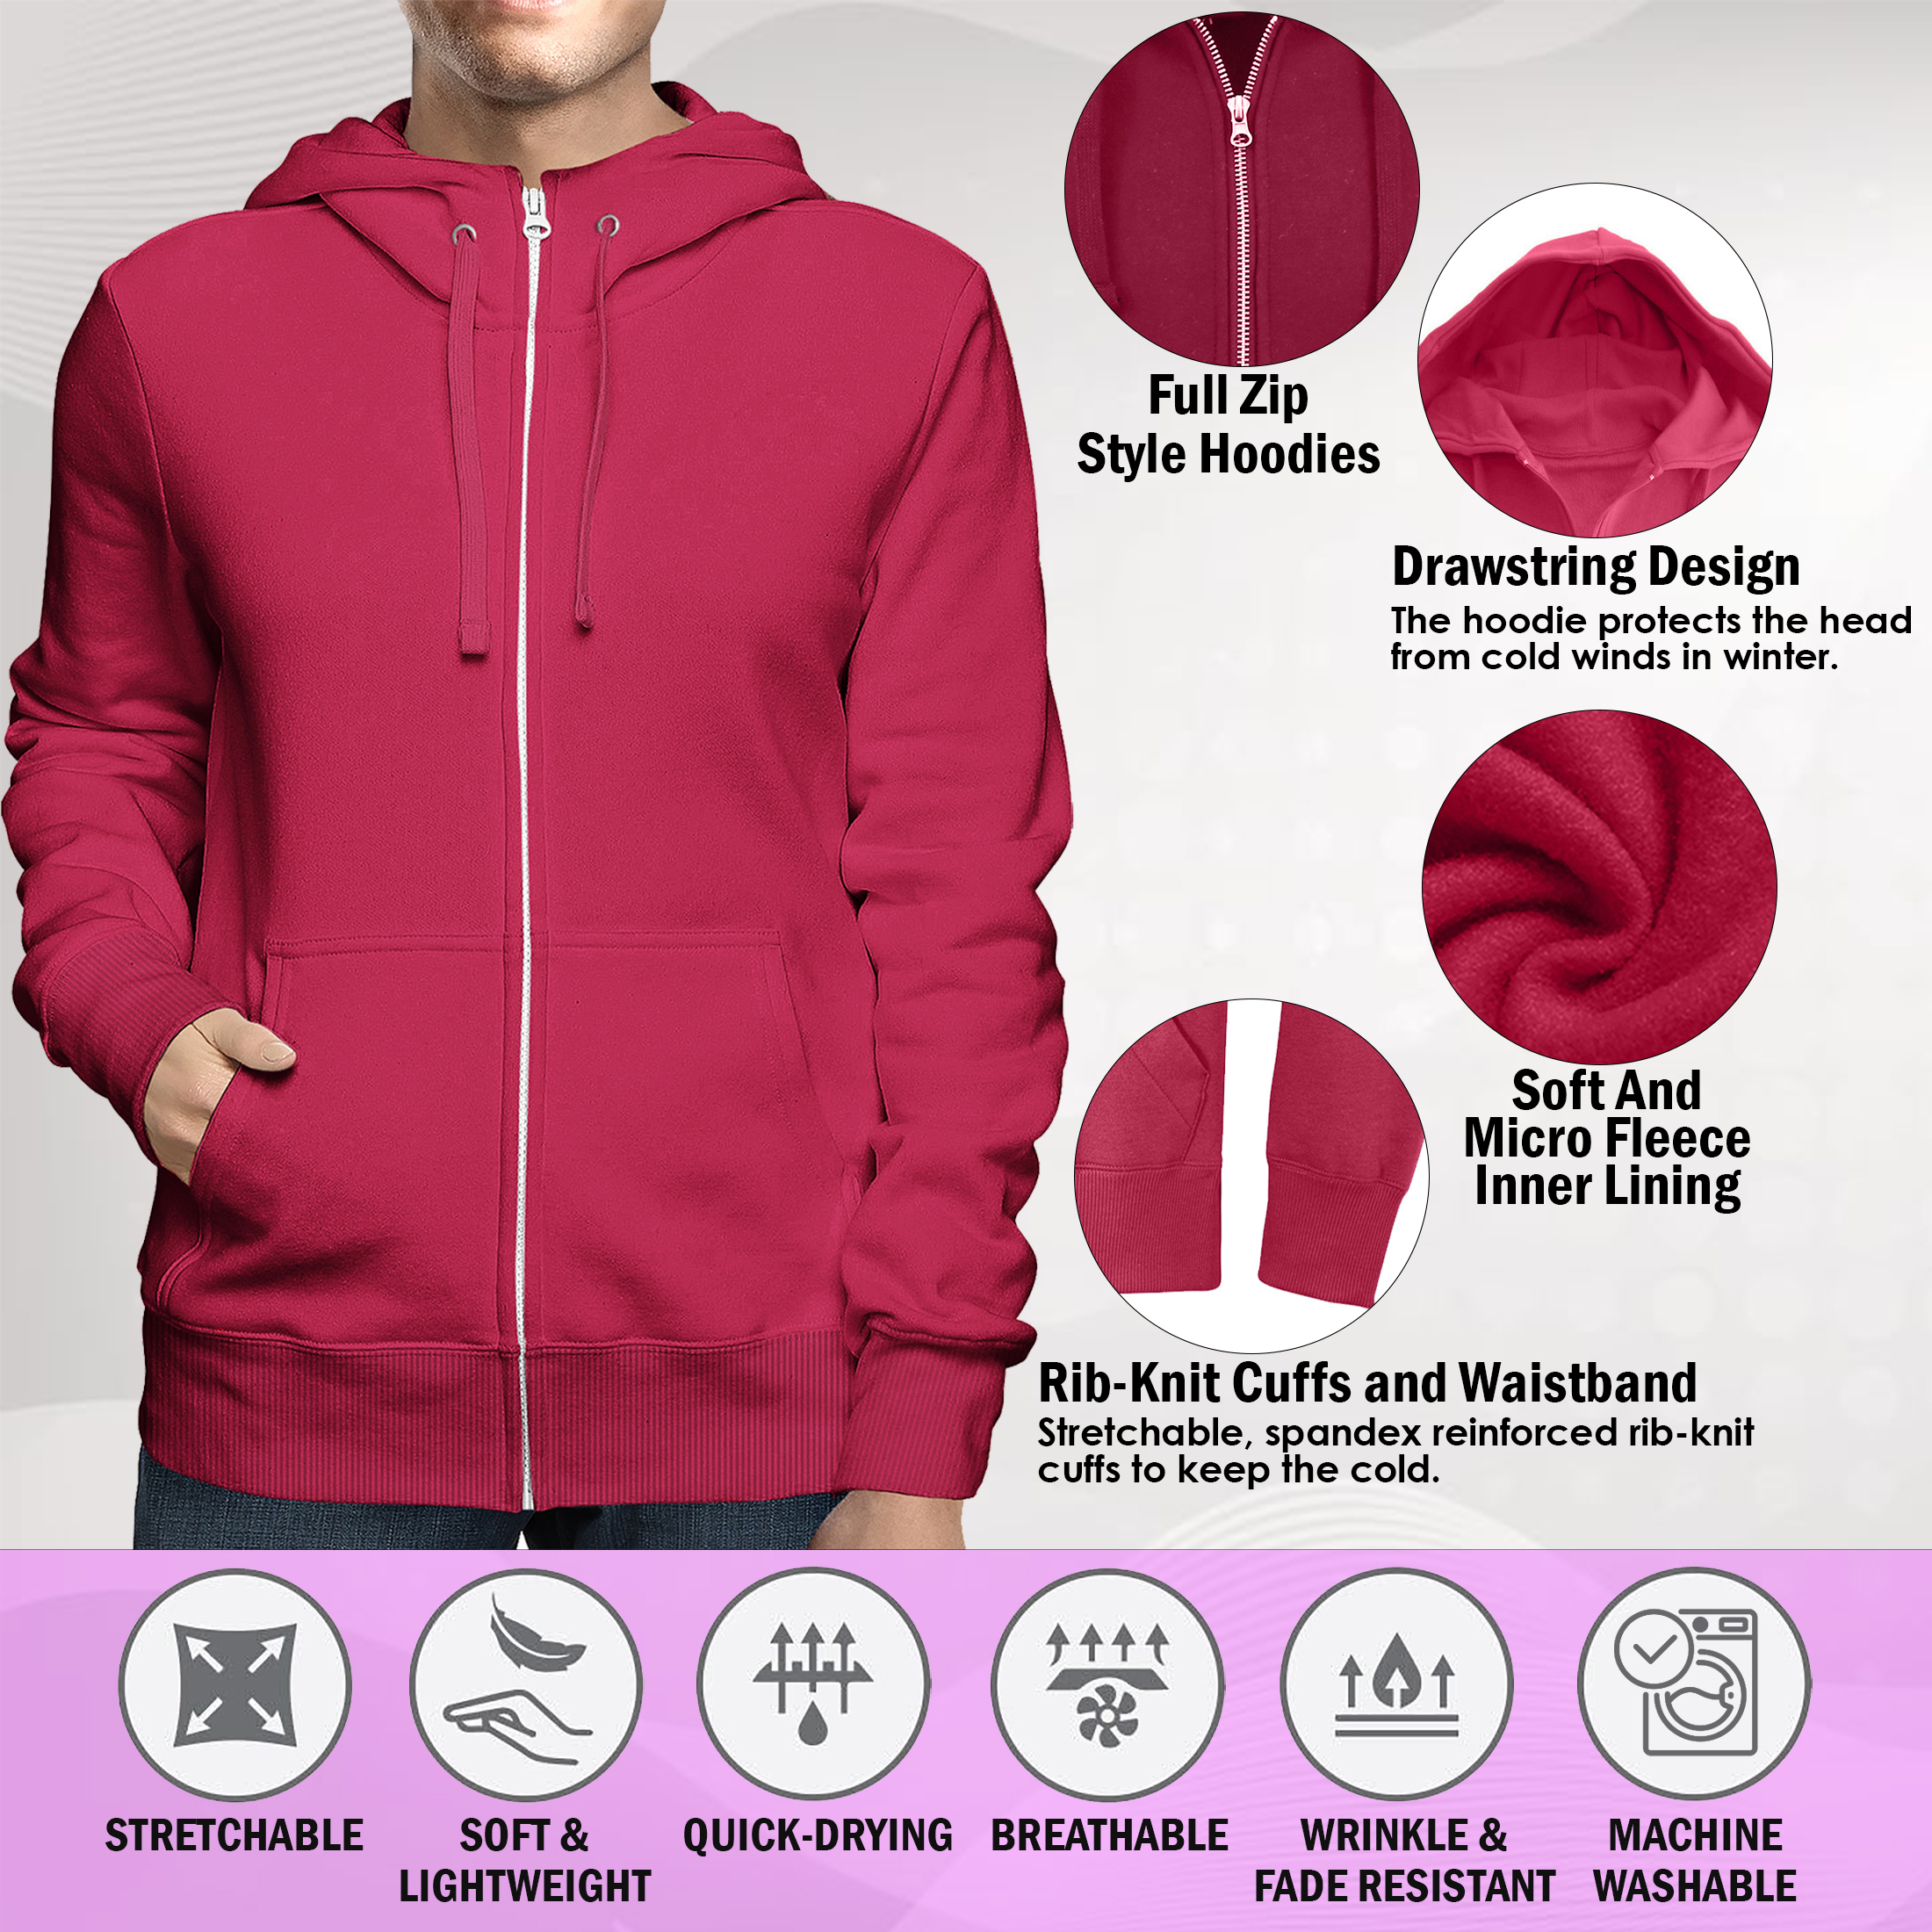 2-Pack: Men's Full Zip Up Fleece-Lined Hoodie Sweatshirt (Big & Tall Size Available) - Navy & Olive, Medium